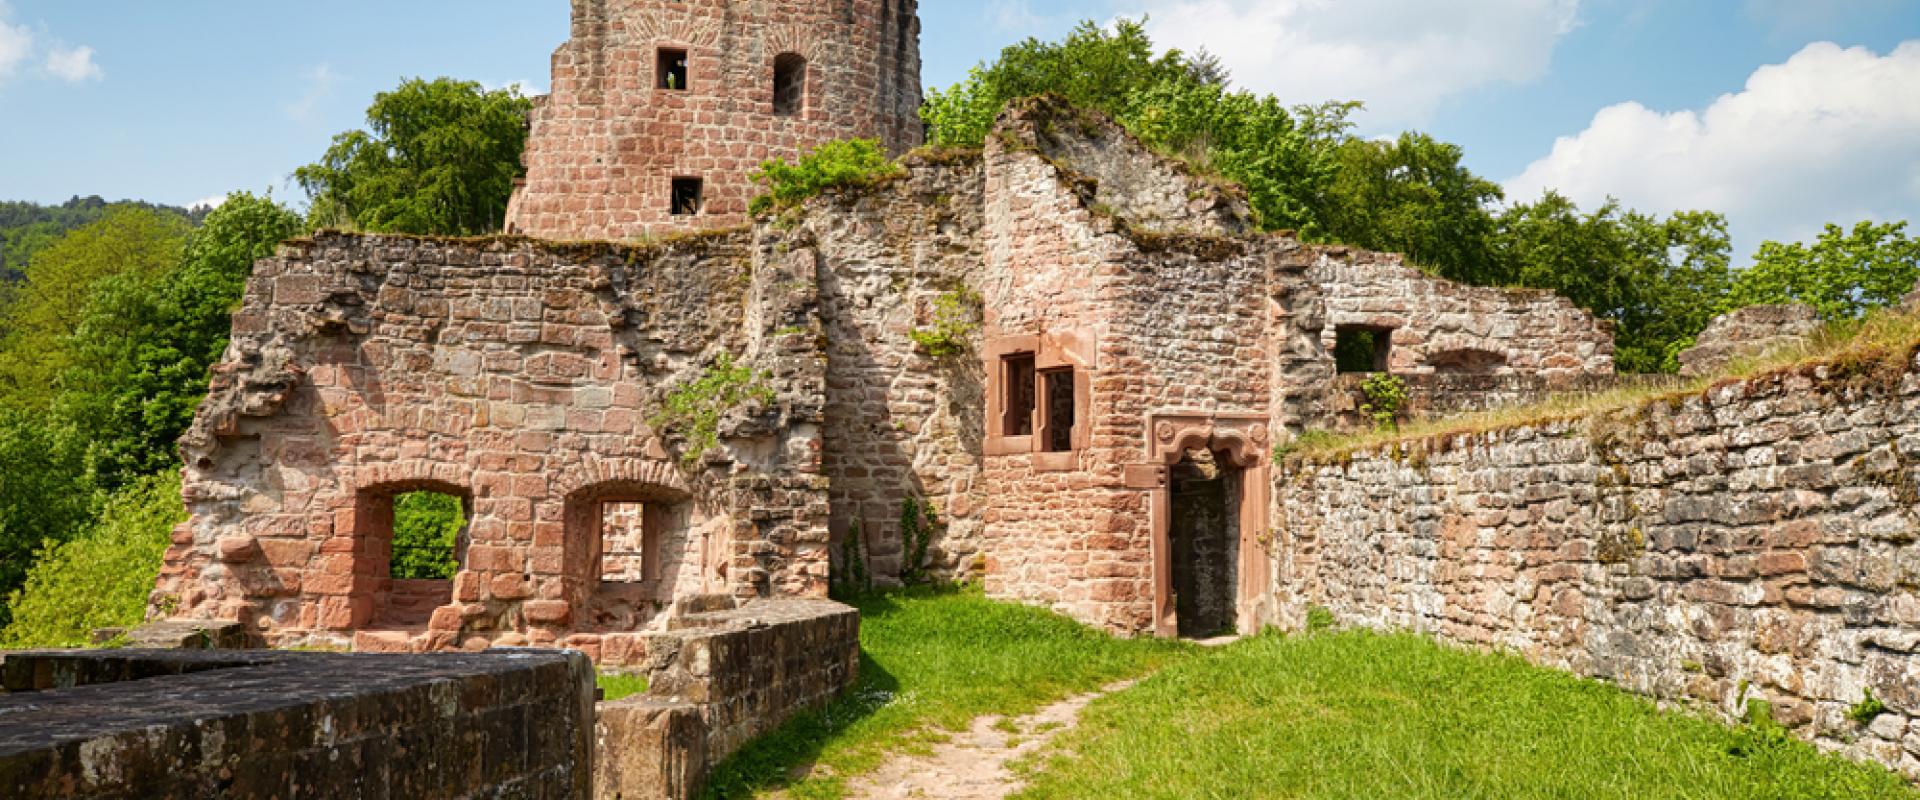 Ruine Hardenberg